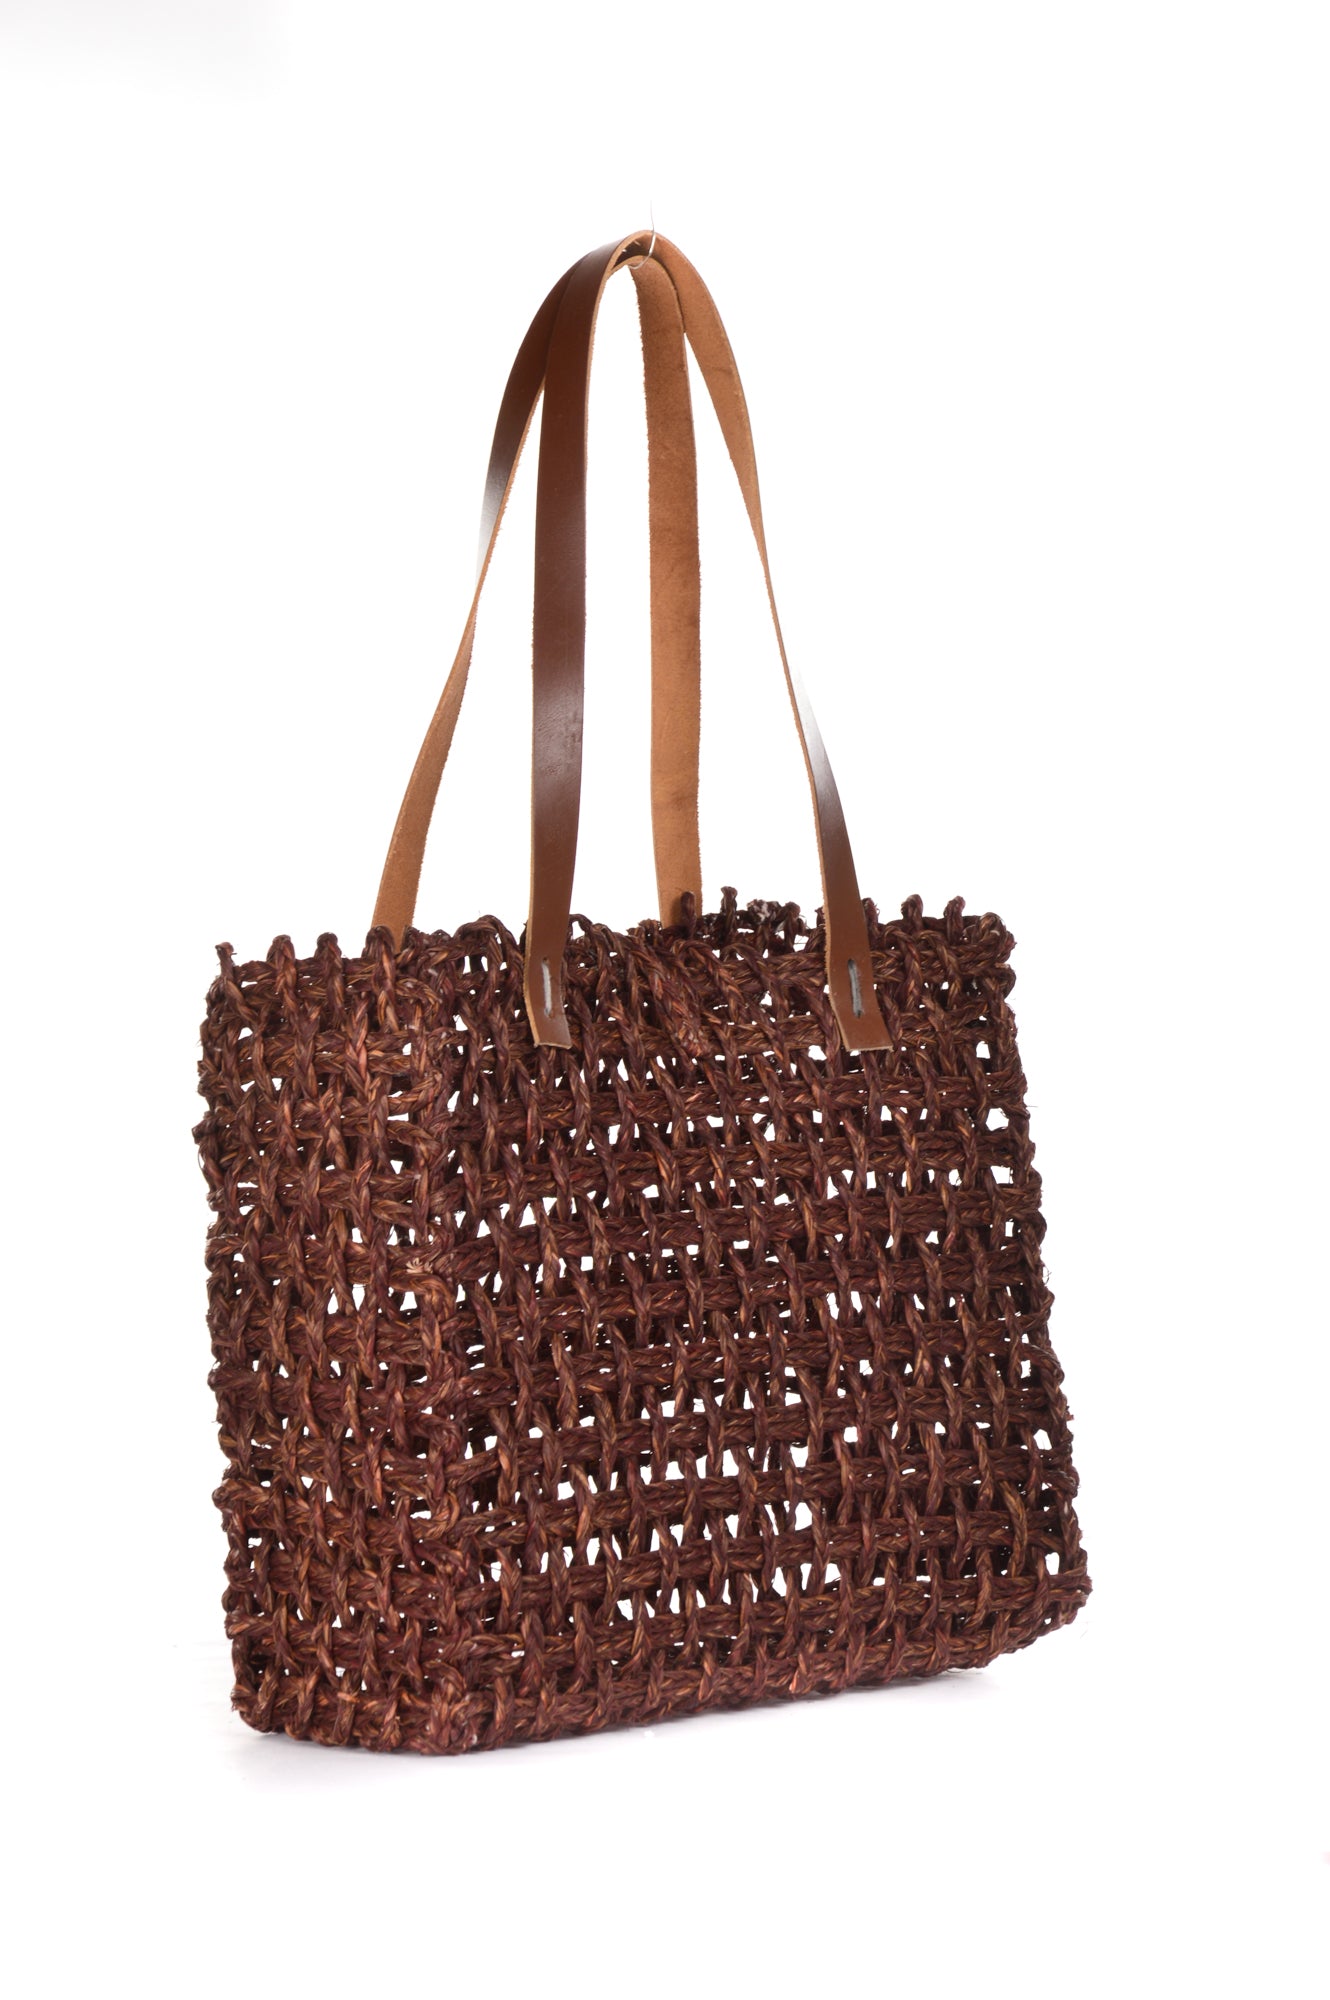 Handmade Jali Market Bag (Large - Brown), 13L x 11W x 5H